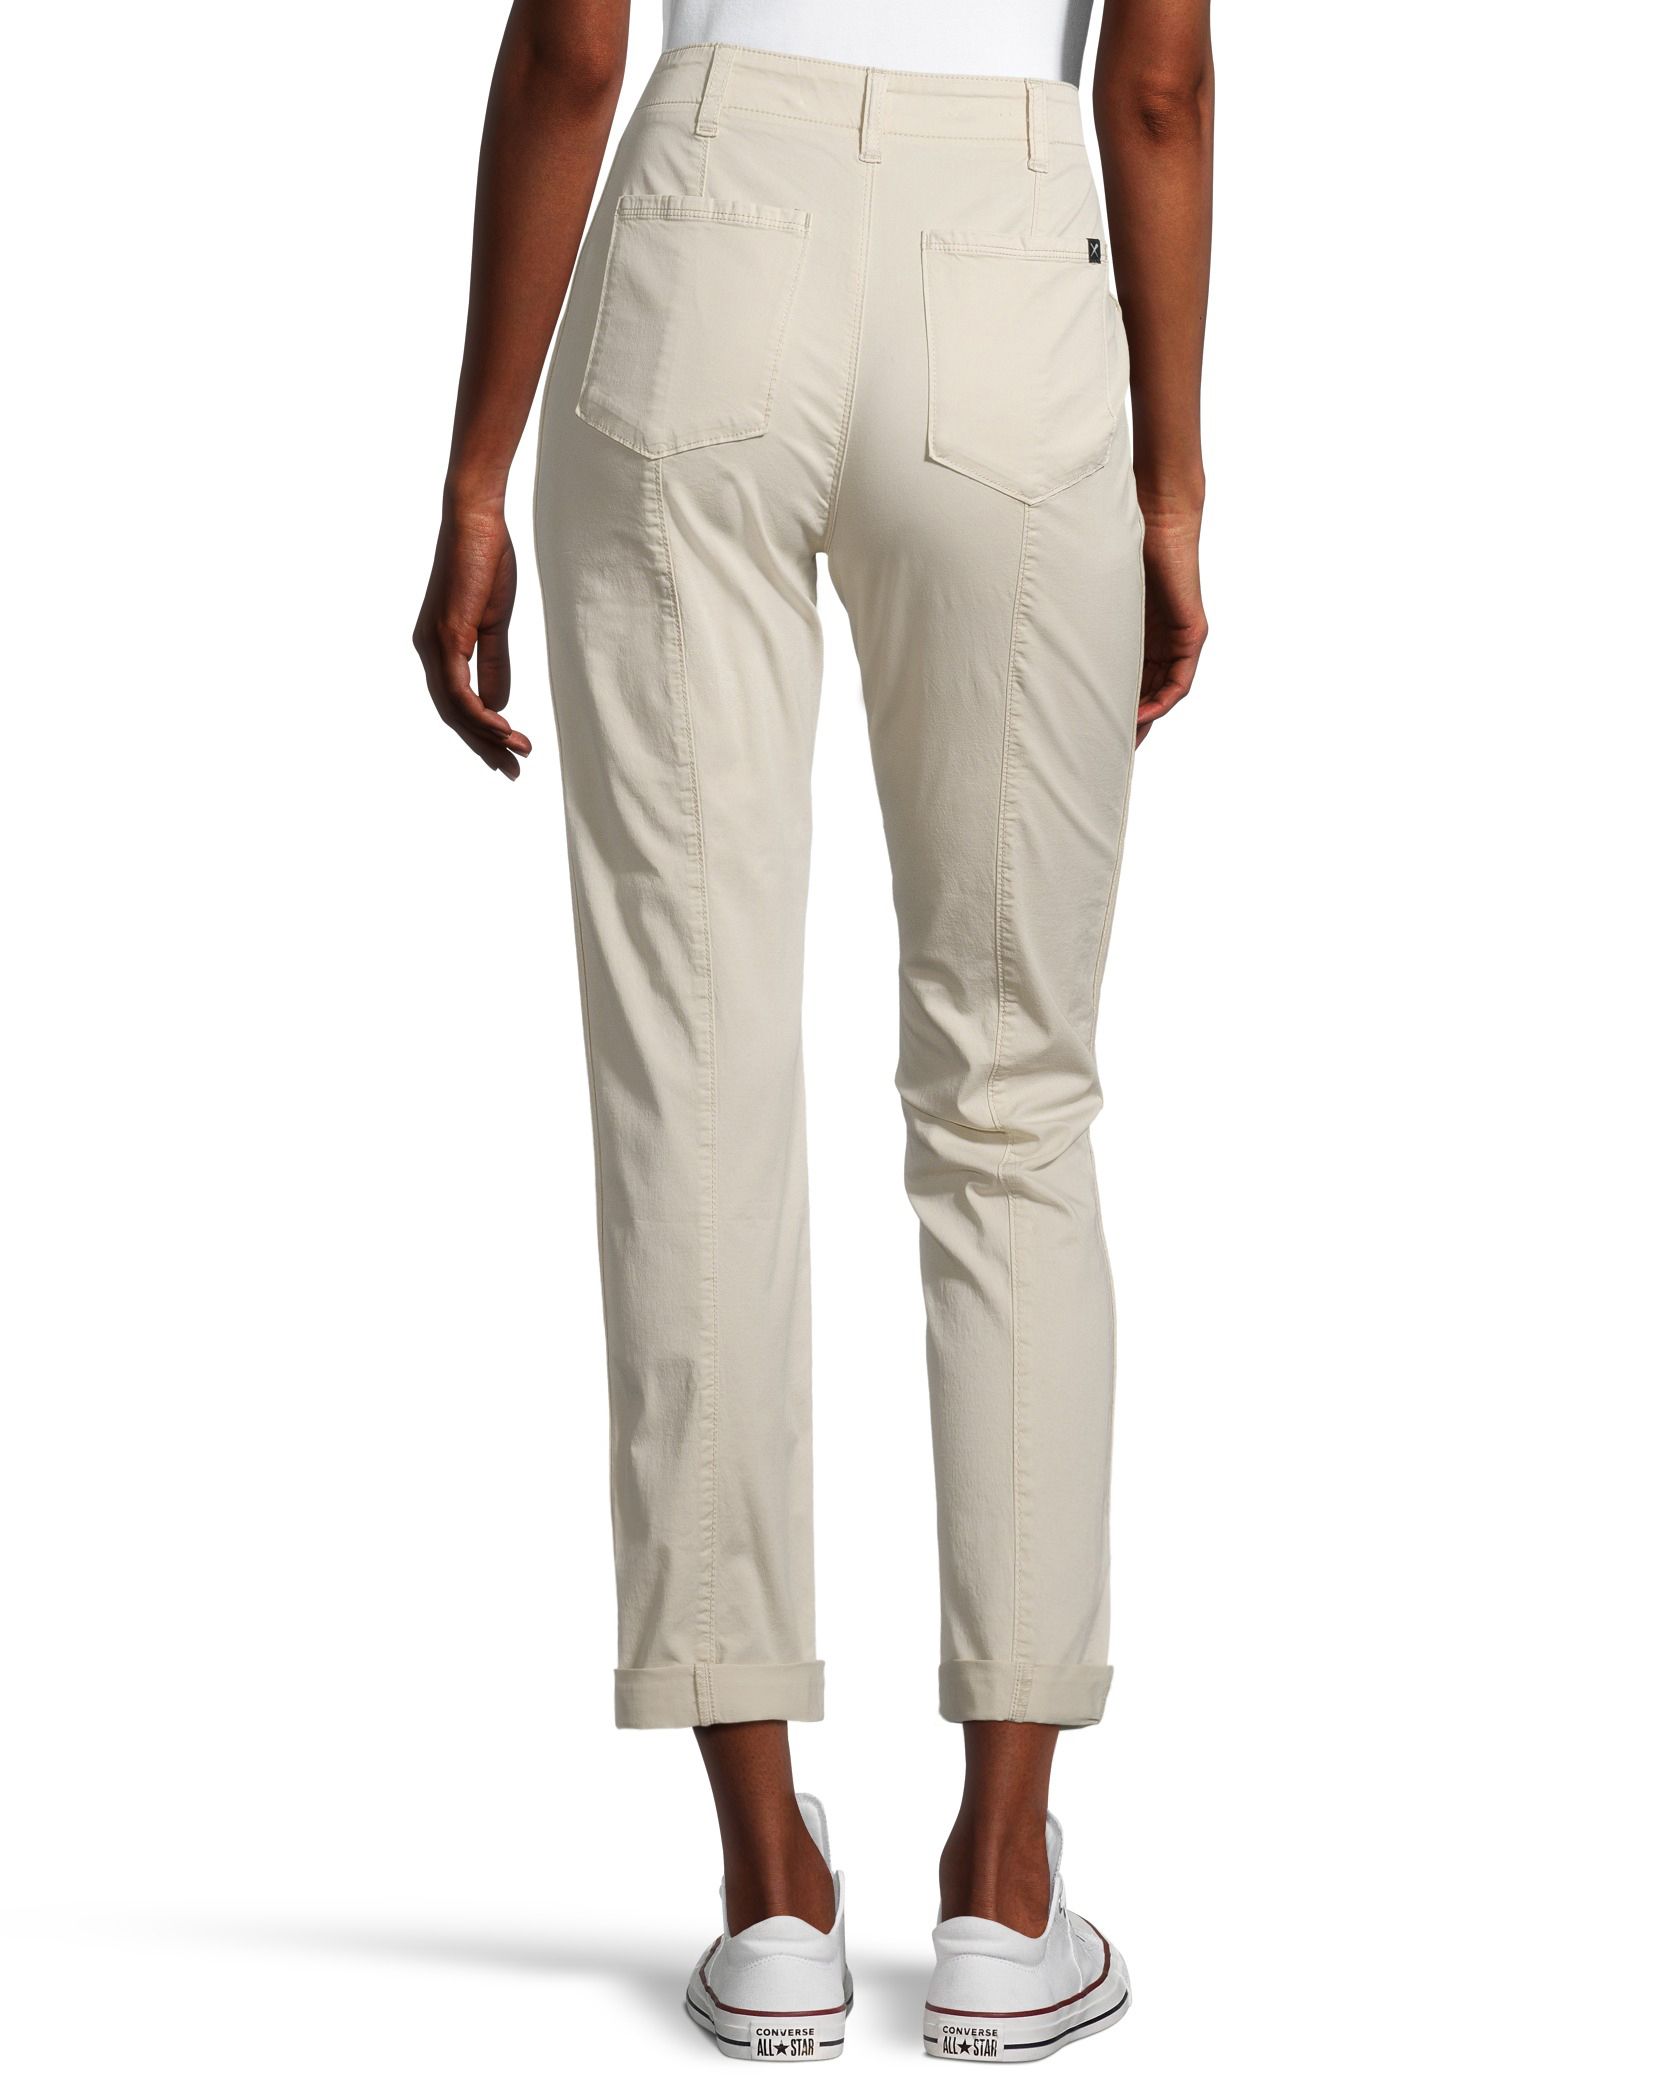 Polyester Fleece Pants Women in Clothing average savings of 58% at Sierra